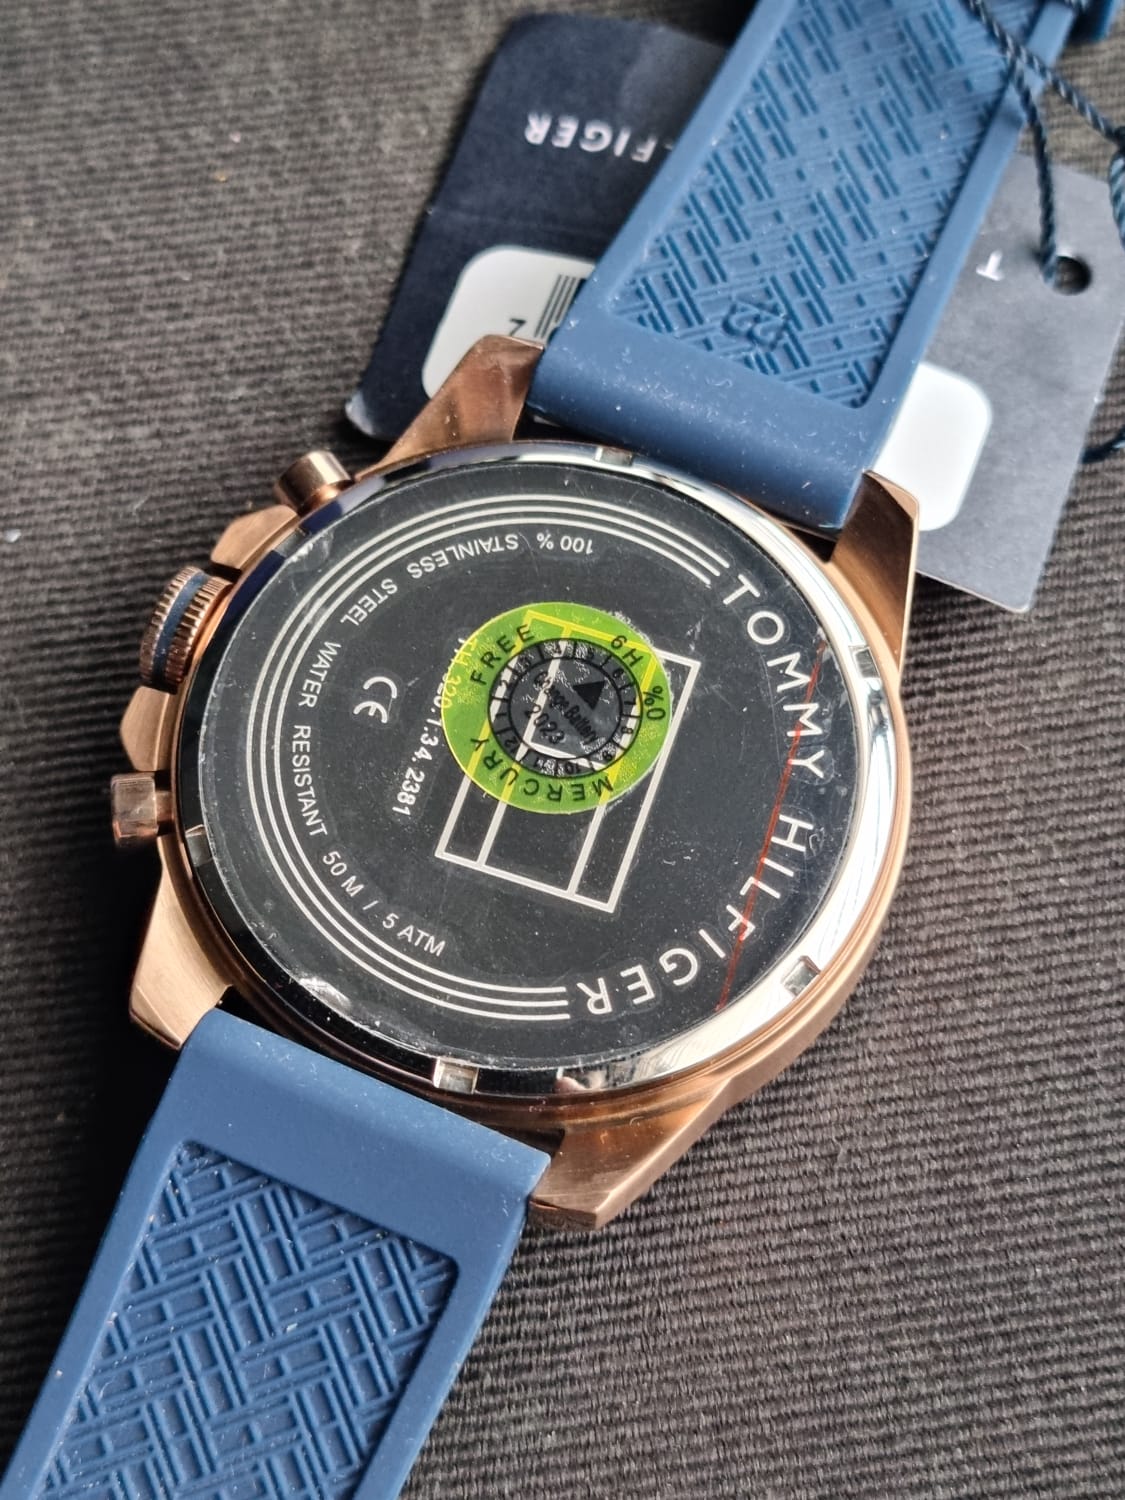 Tommy Hilfiger Men’s Quartz Blue Silicone Strap Blue Dial 46mm Watch 1791474